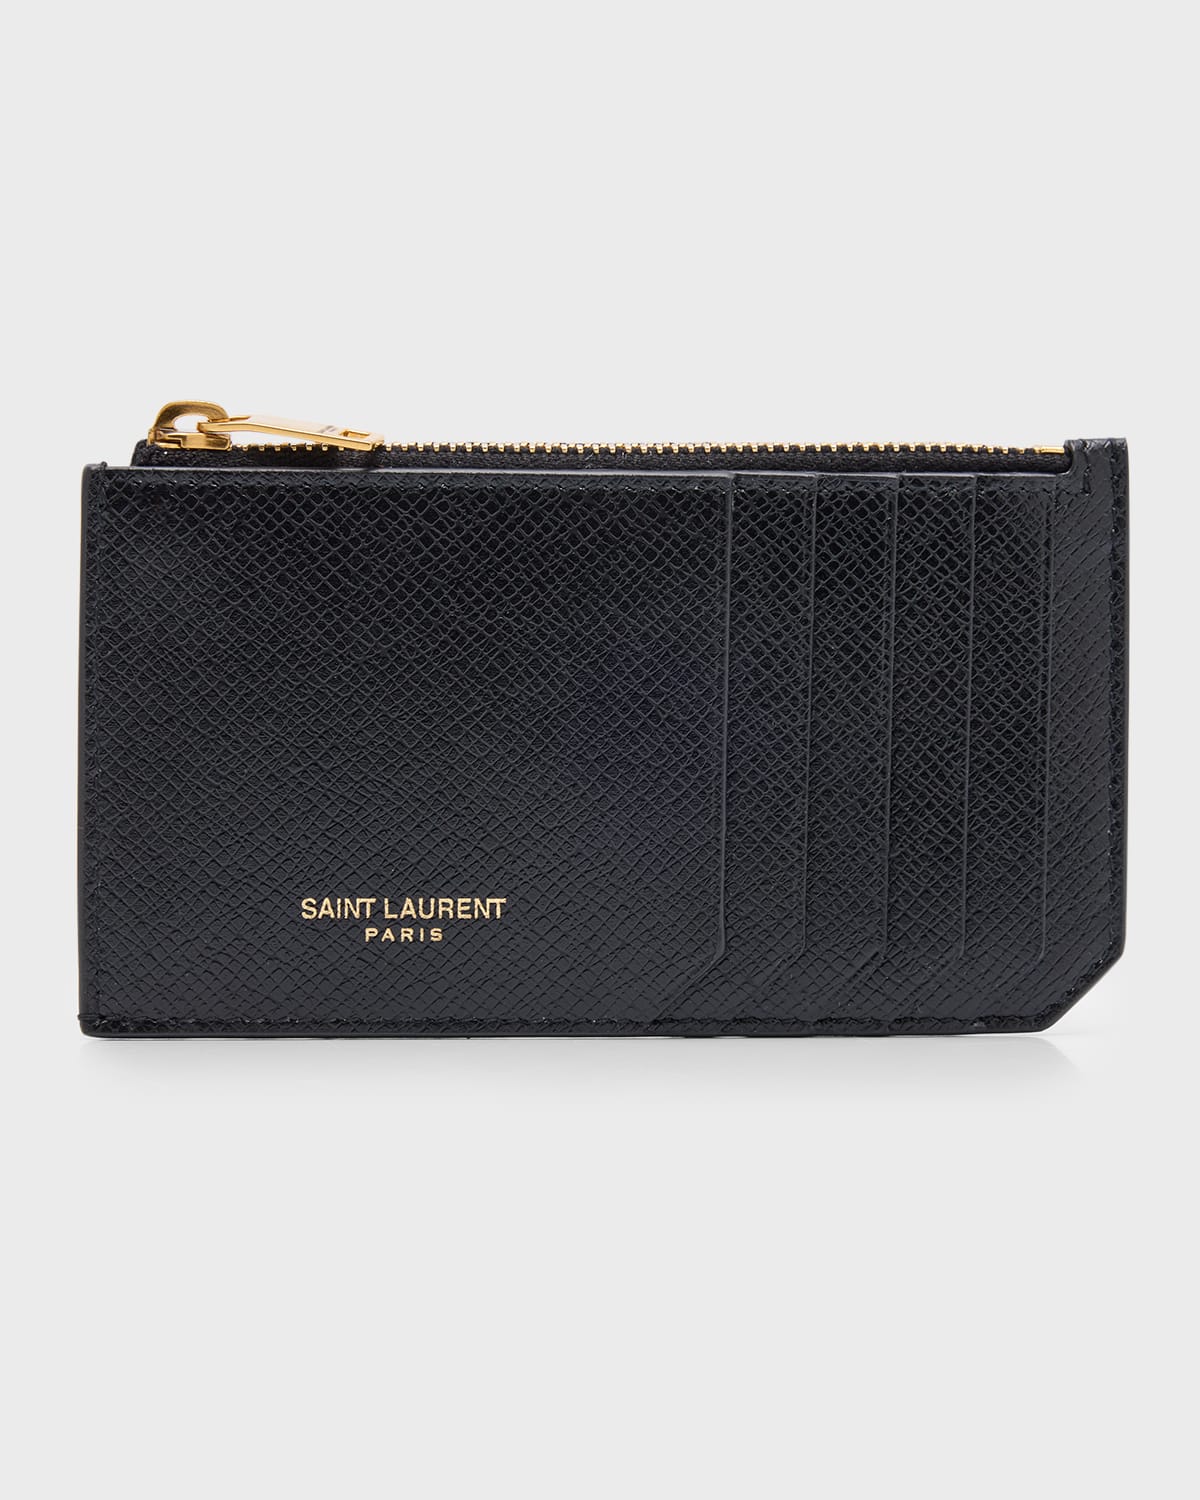 Saint Laurent Men's Leather Zip Card Holder In Black